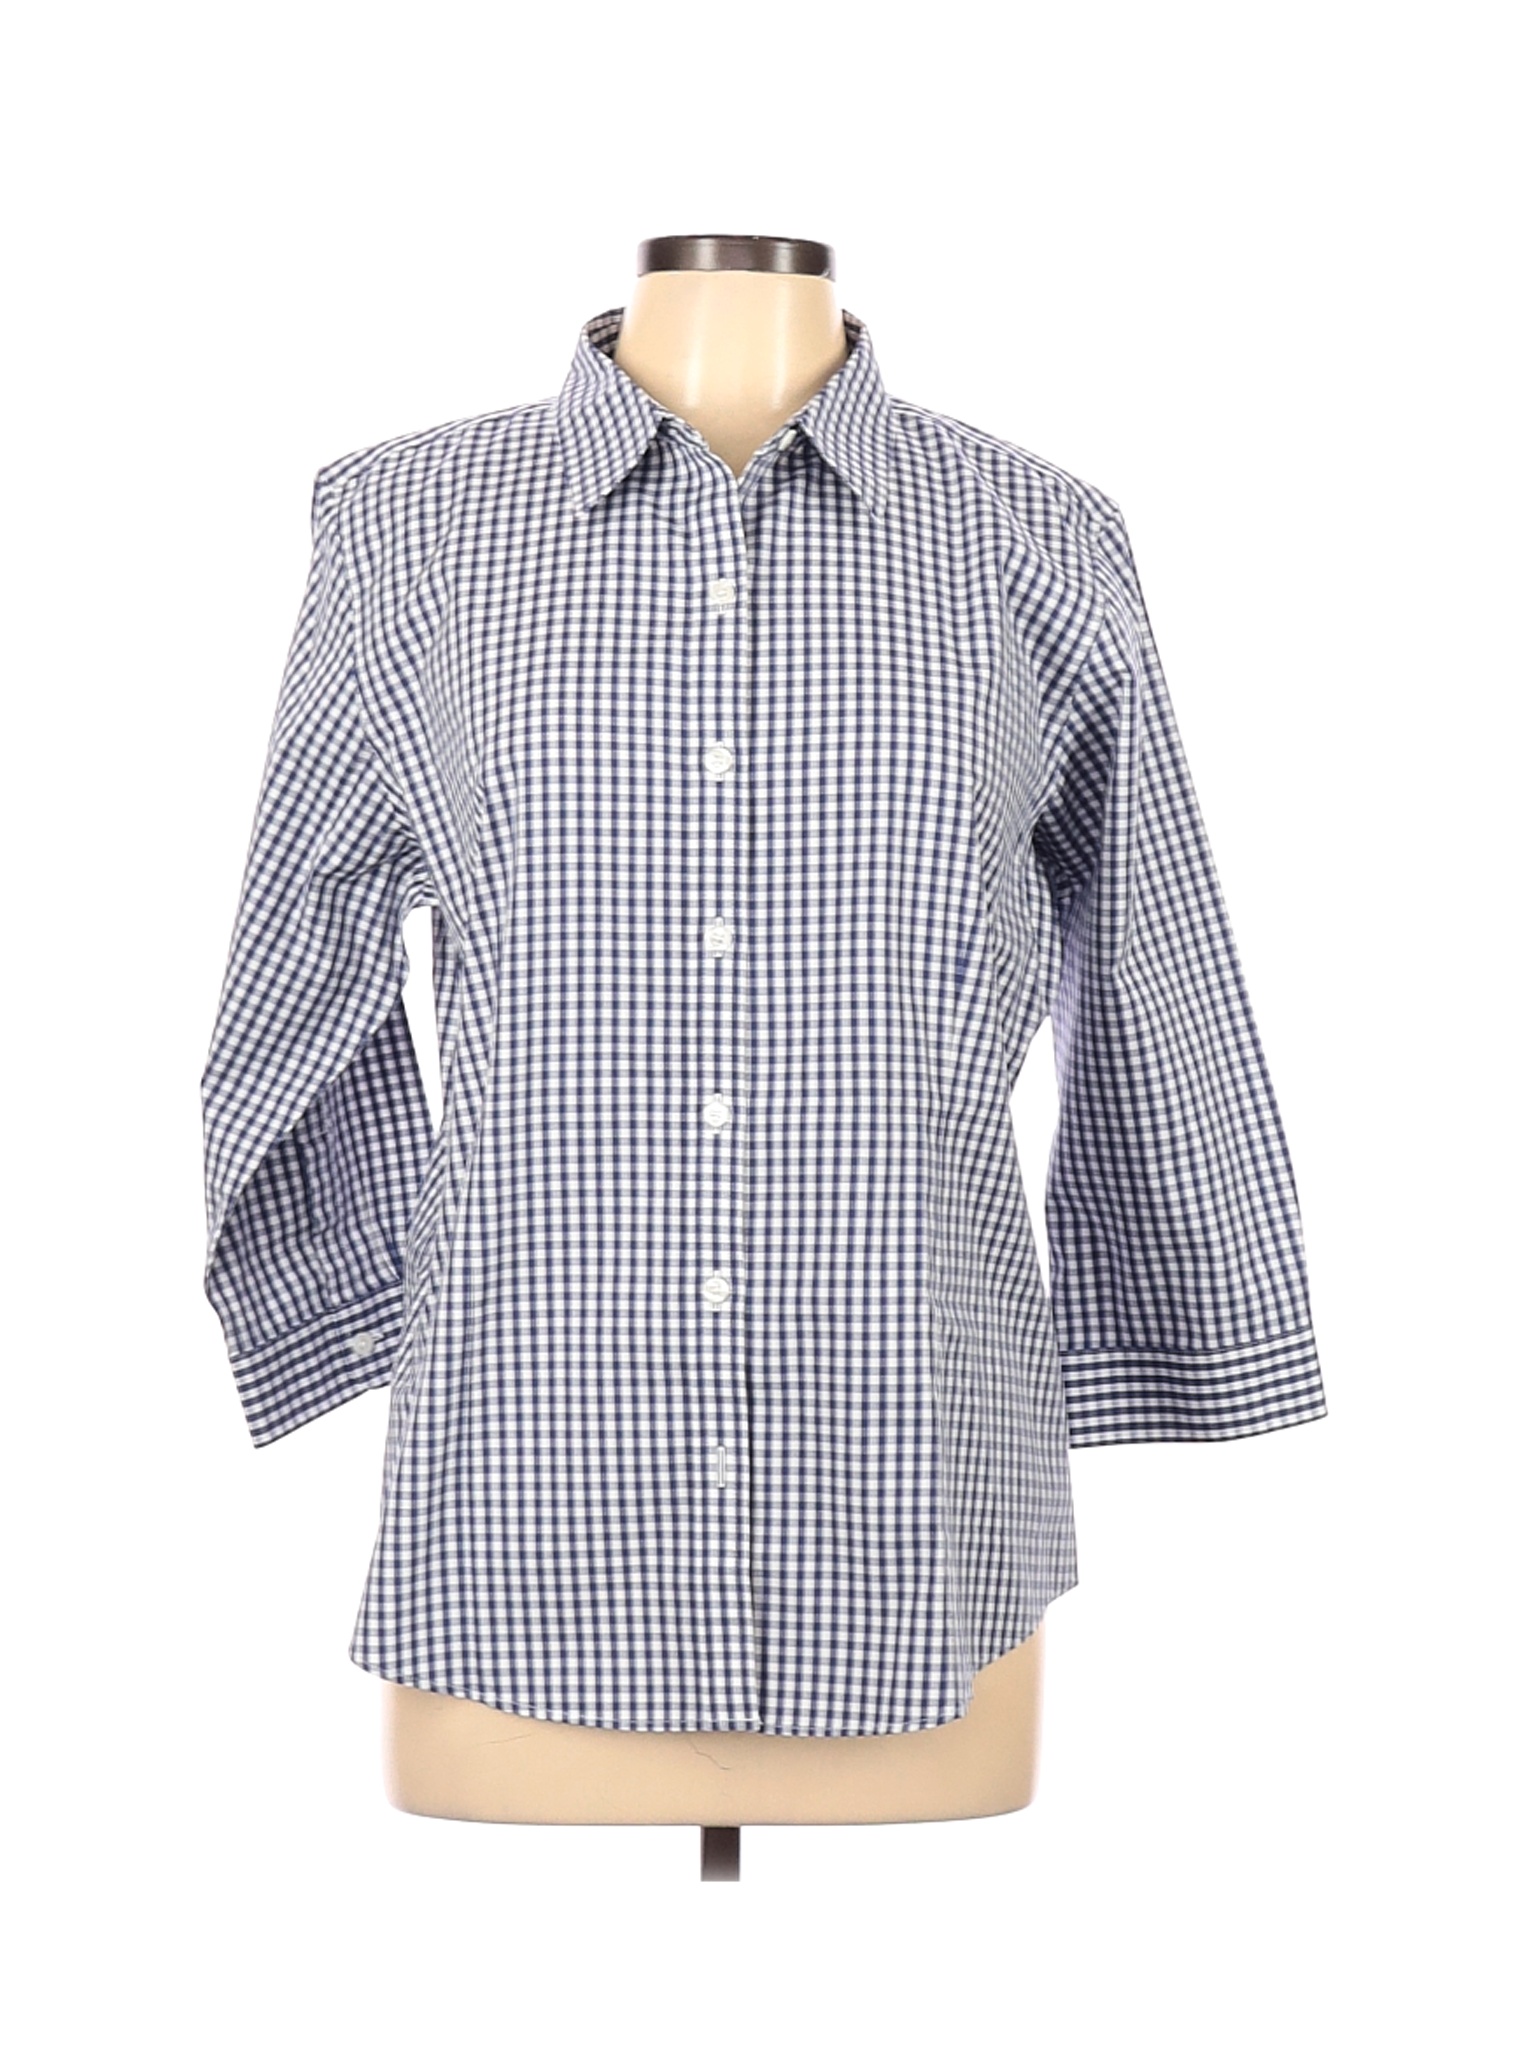 L.L.Bean Women Blue Long Sleeve Button-Down Shirt L | eBay